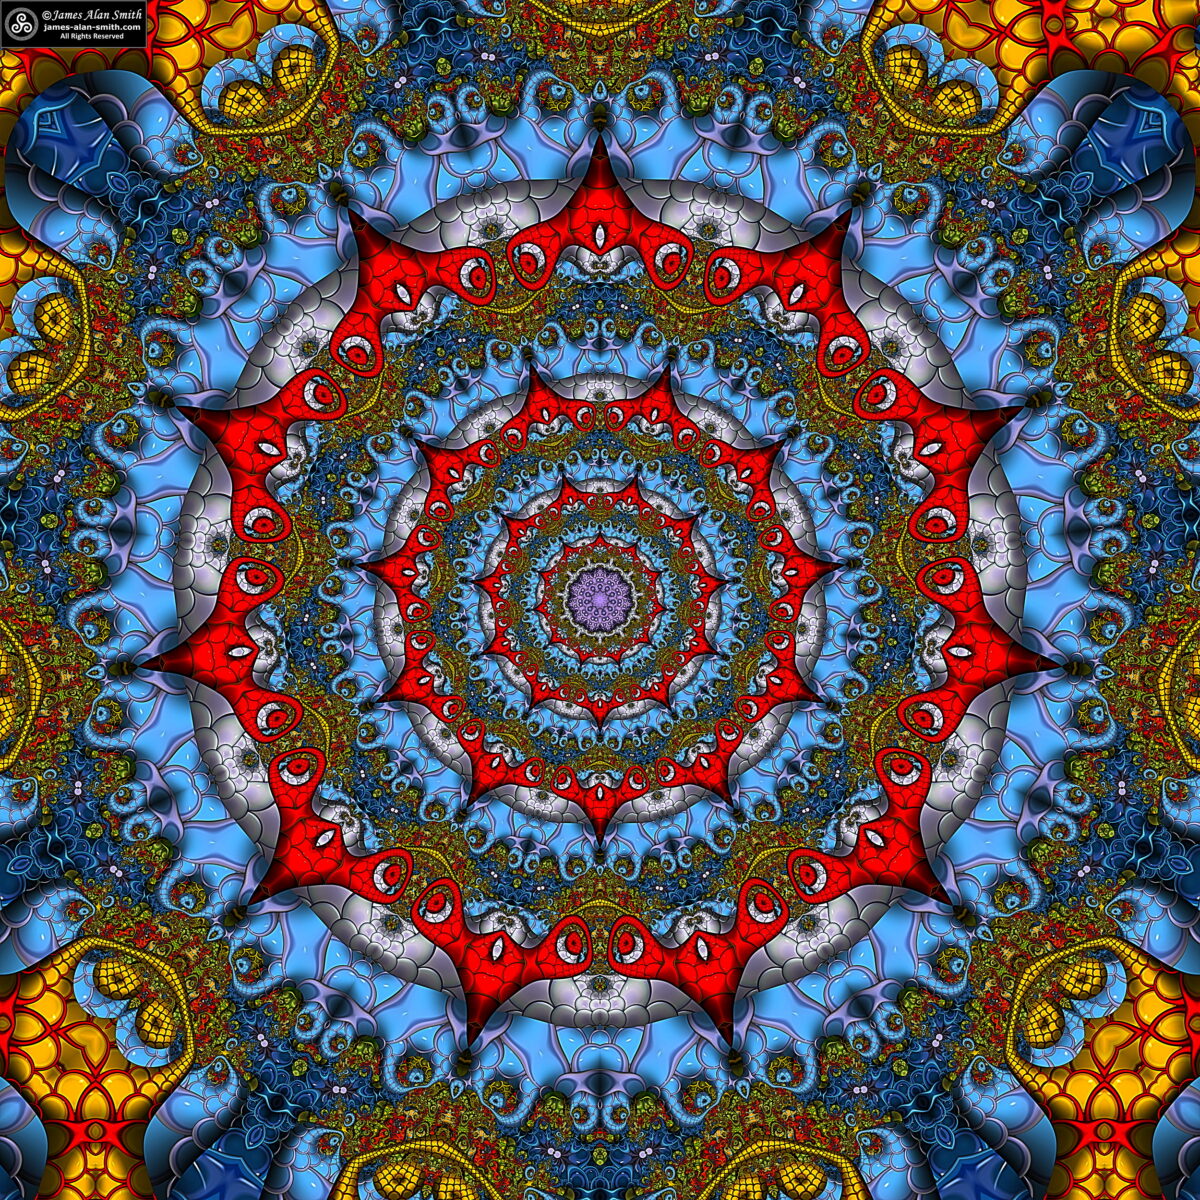 Unusual Mandala Series #073121: Artwork by James Alan Smith